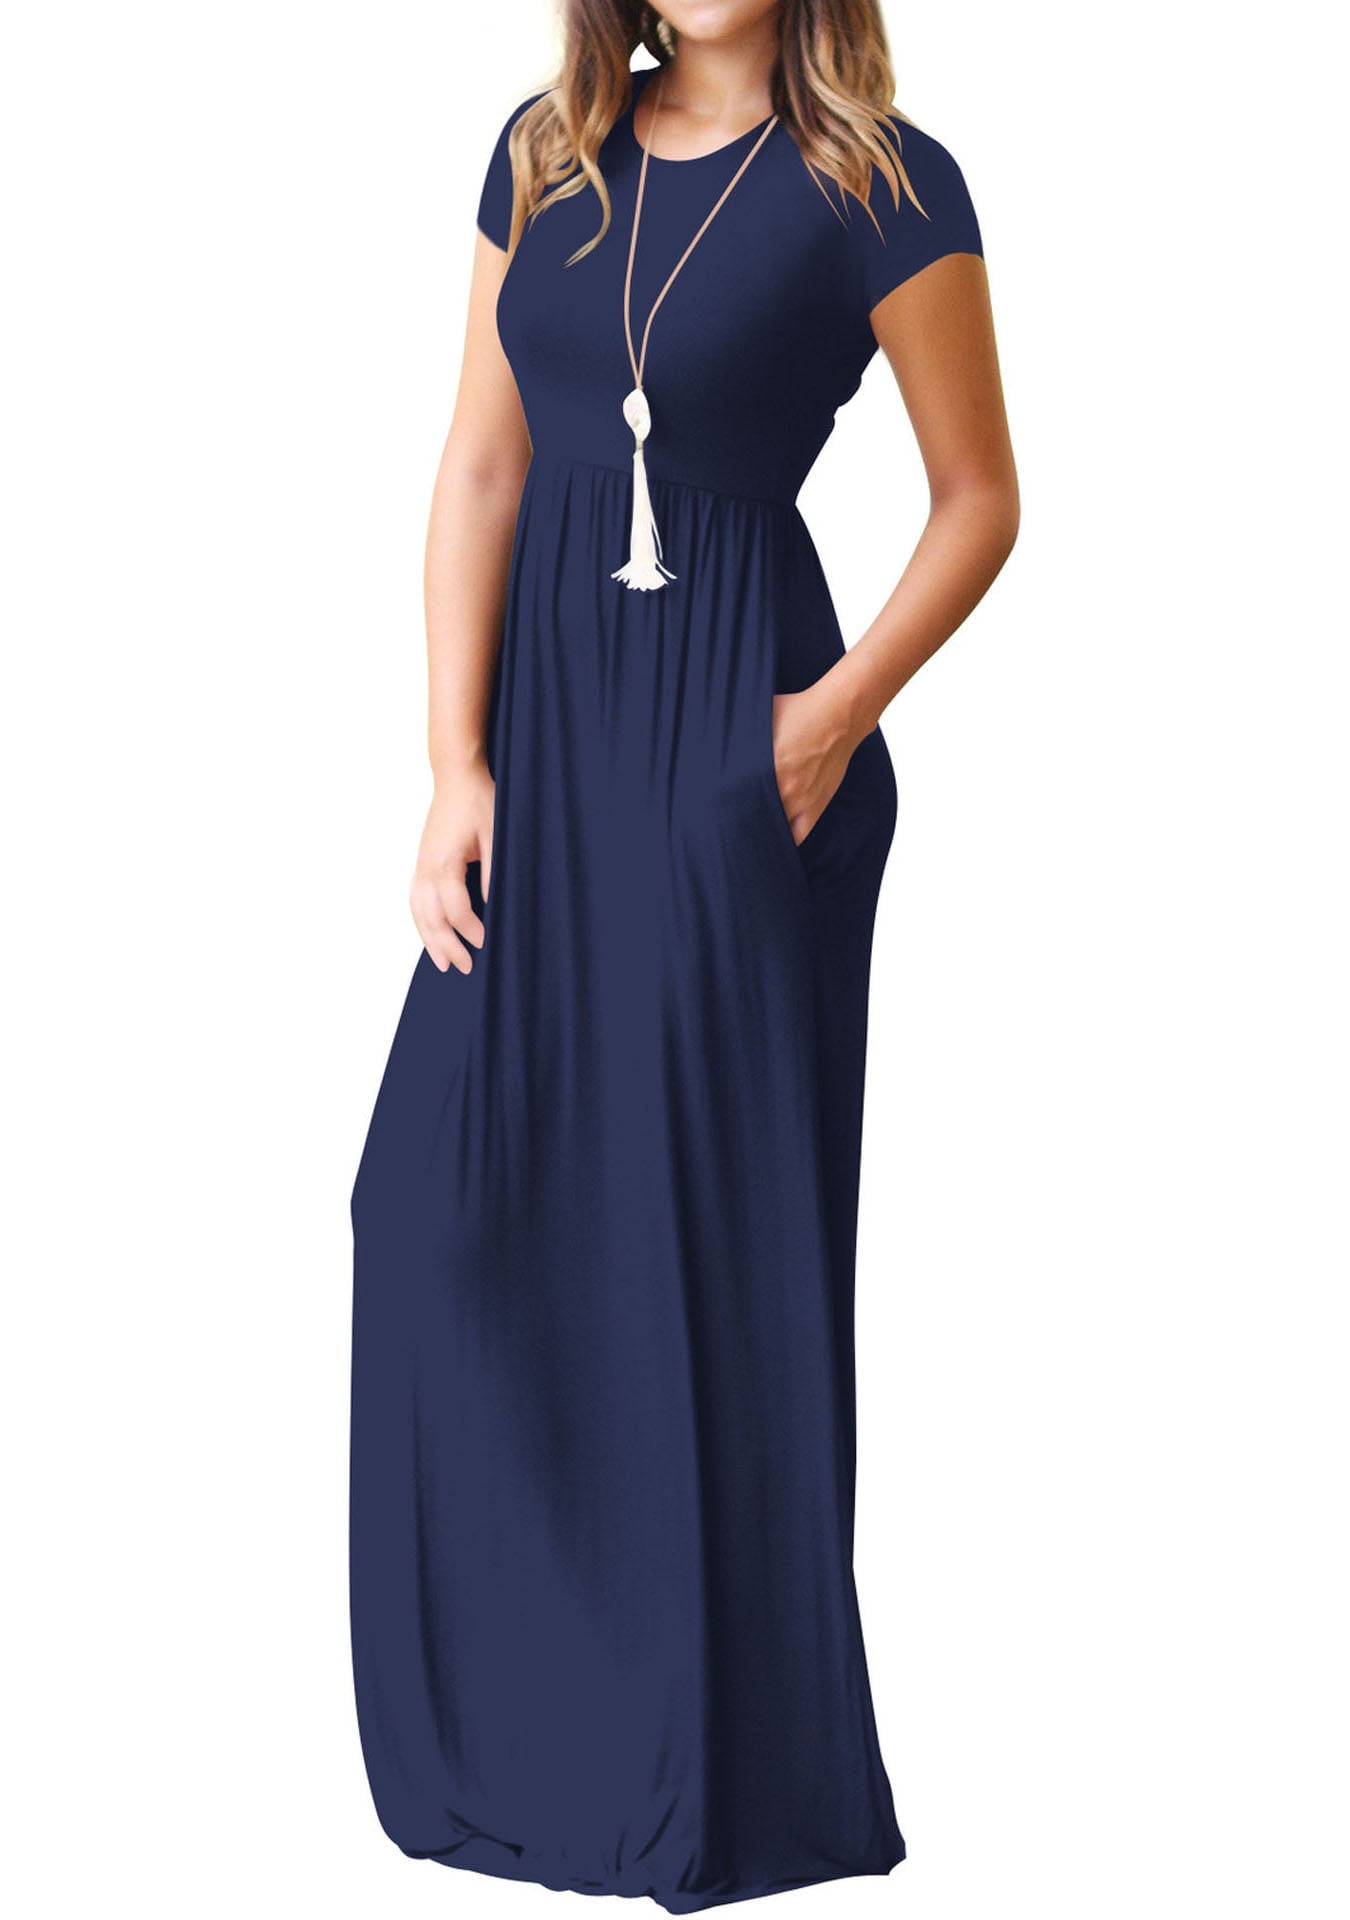 Women's Casual Dresses - Short & Long Casual Dresses